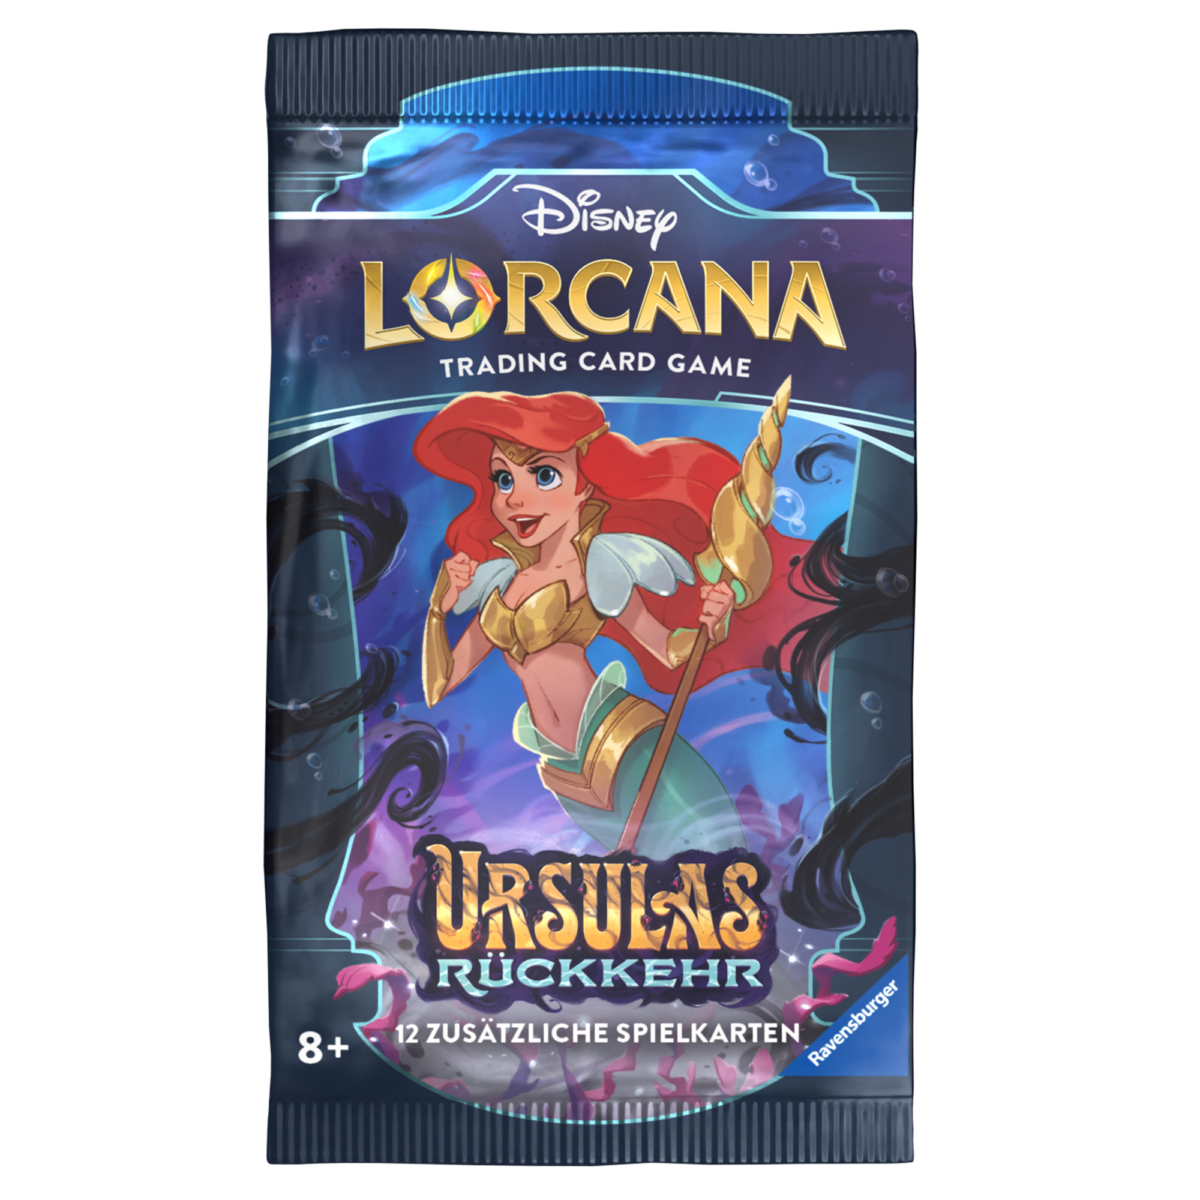 Disney Lorcana Trading Card Game: Kapitel 4 - Ursulas Rückkehr: Booster Pack Arielle